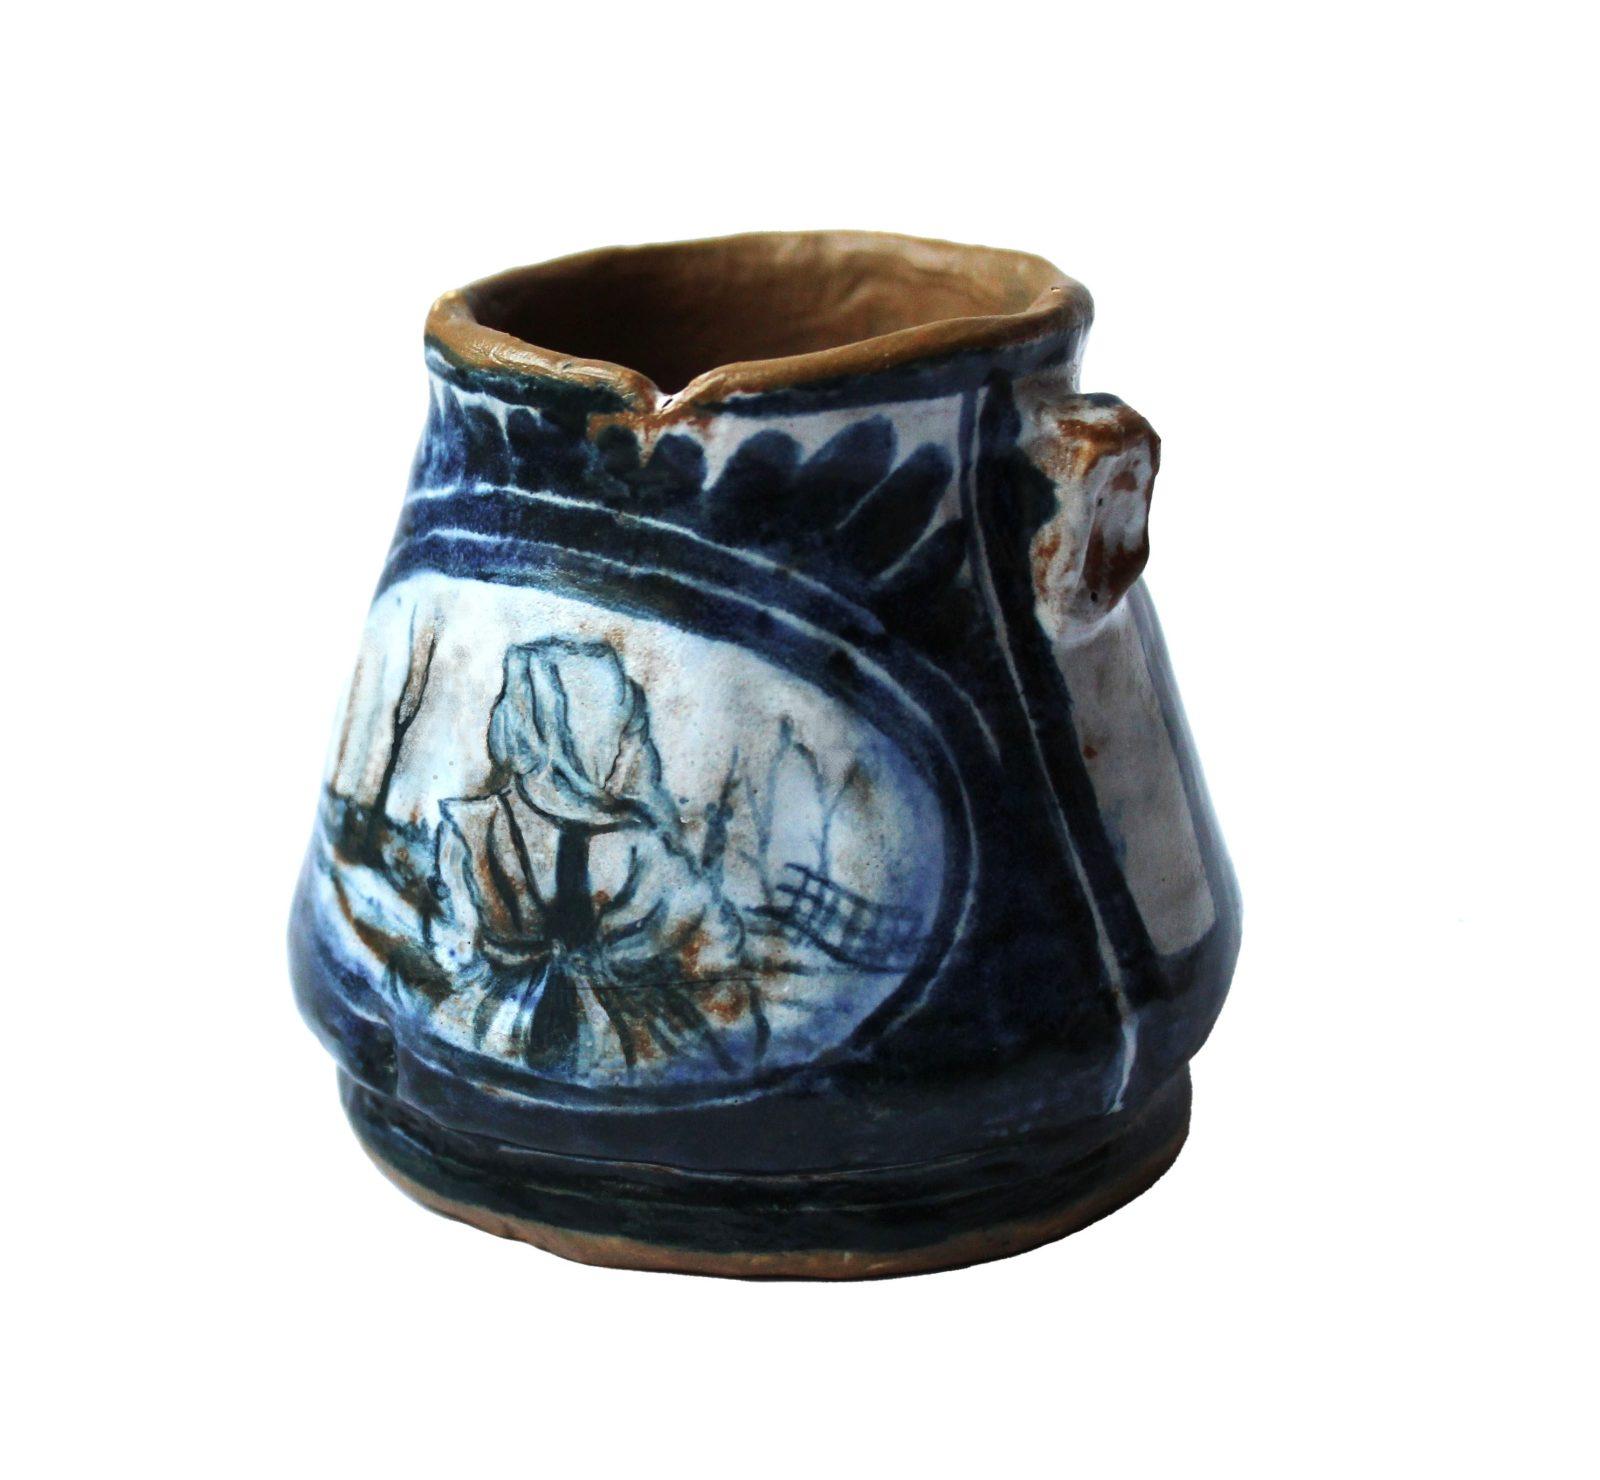 Ceramic vessel depicting The Witness (Sentinel) (Kippfigur)